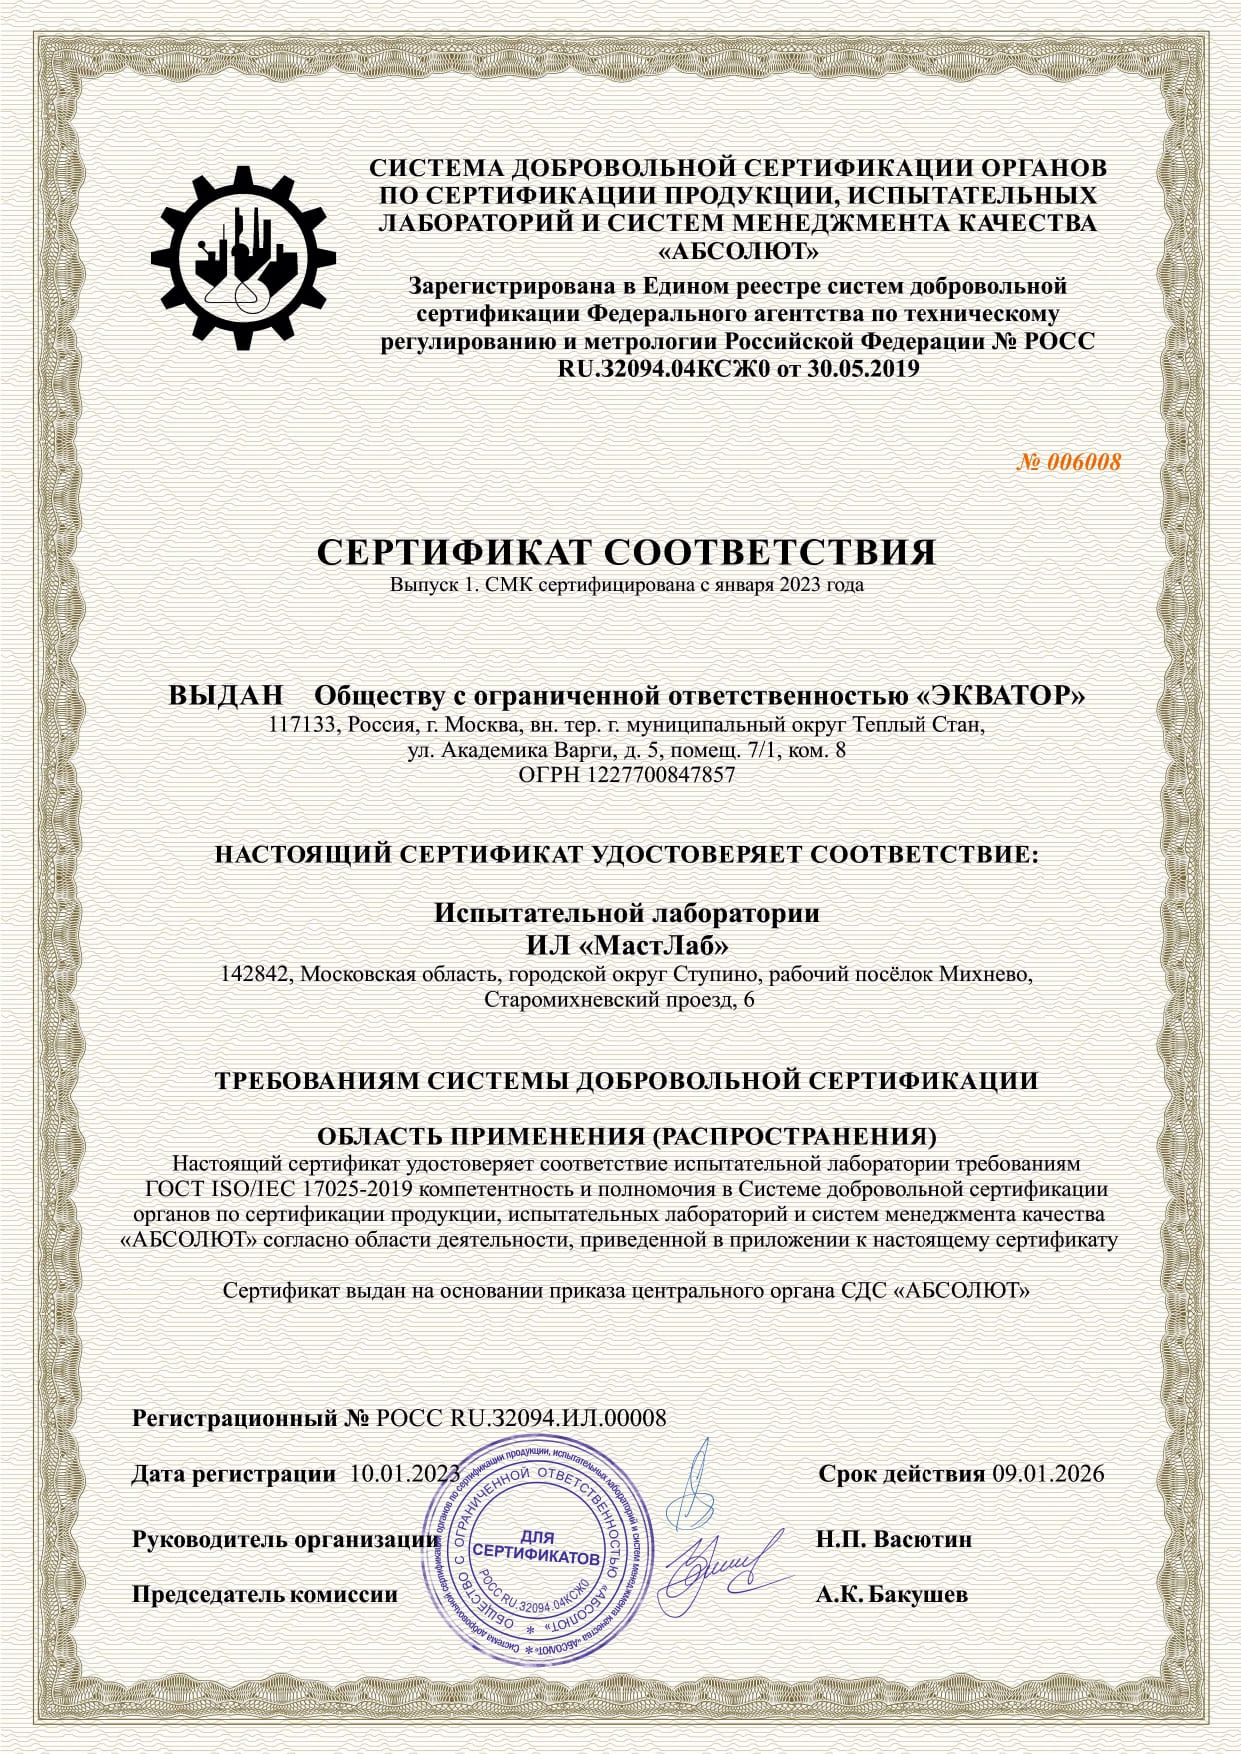 Certificate of conformity of 